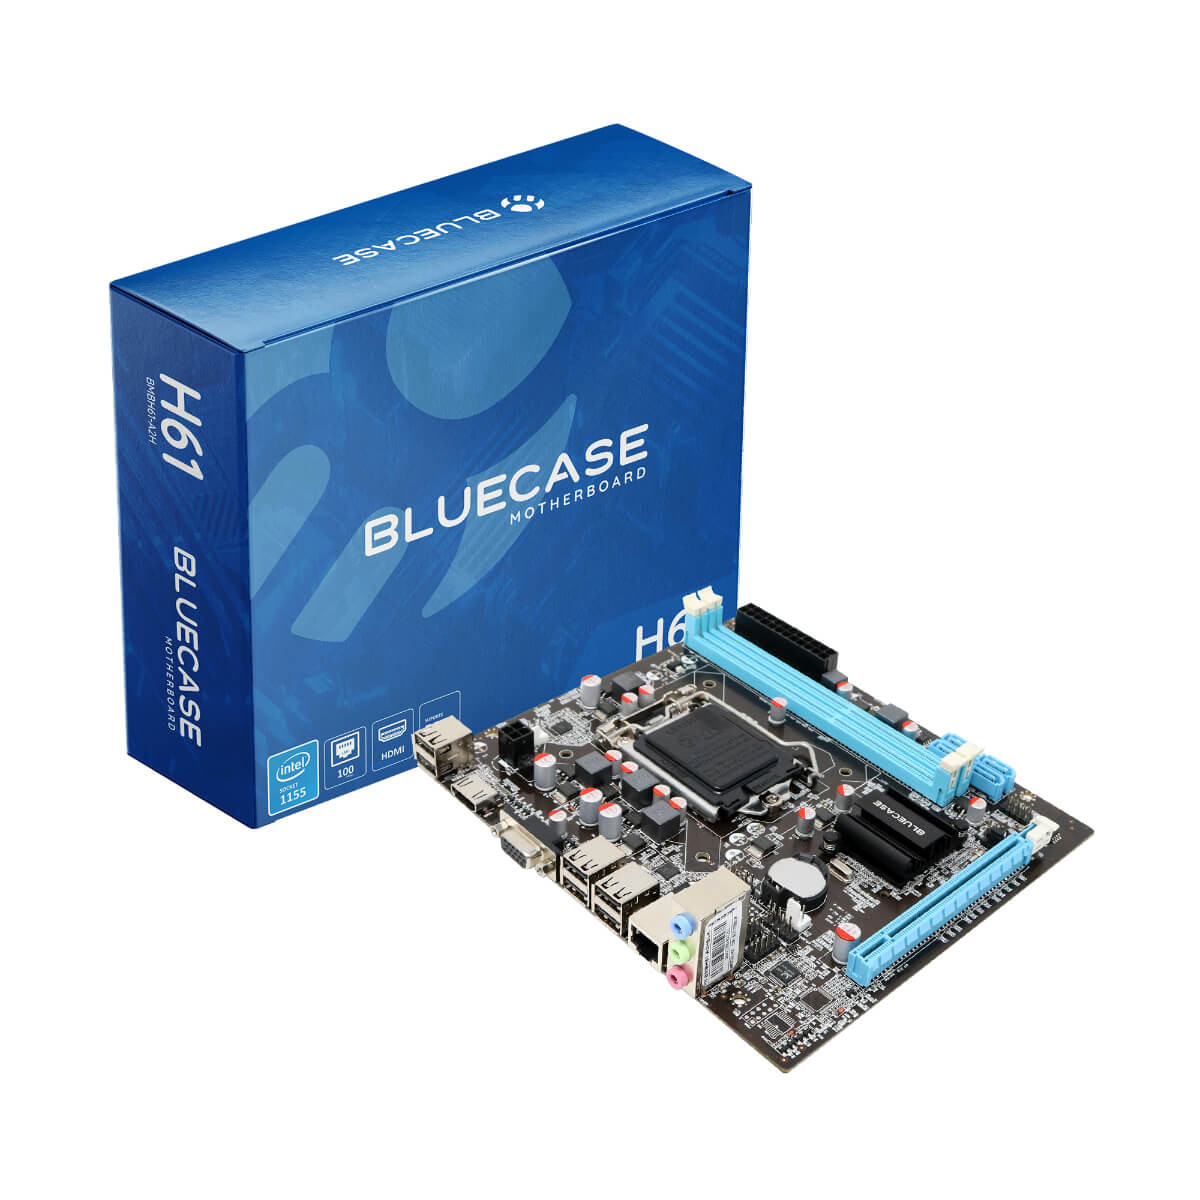 Placa Mãe Bluecase BMBH61-A2HBX - (LGA 1155 DDR3) - Chipset Intel H61